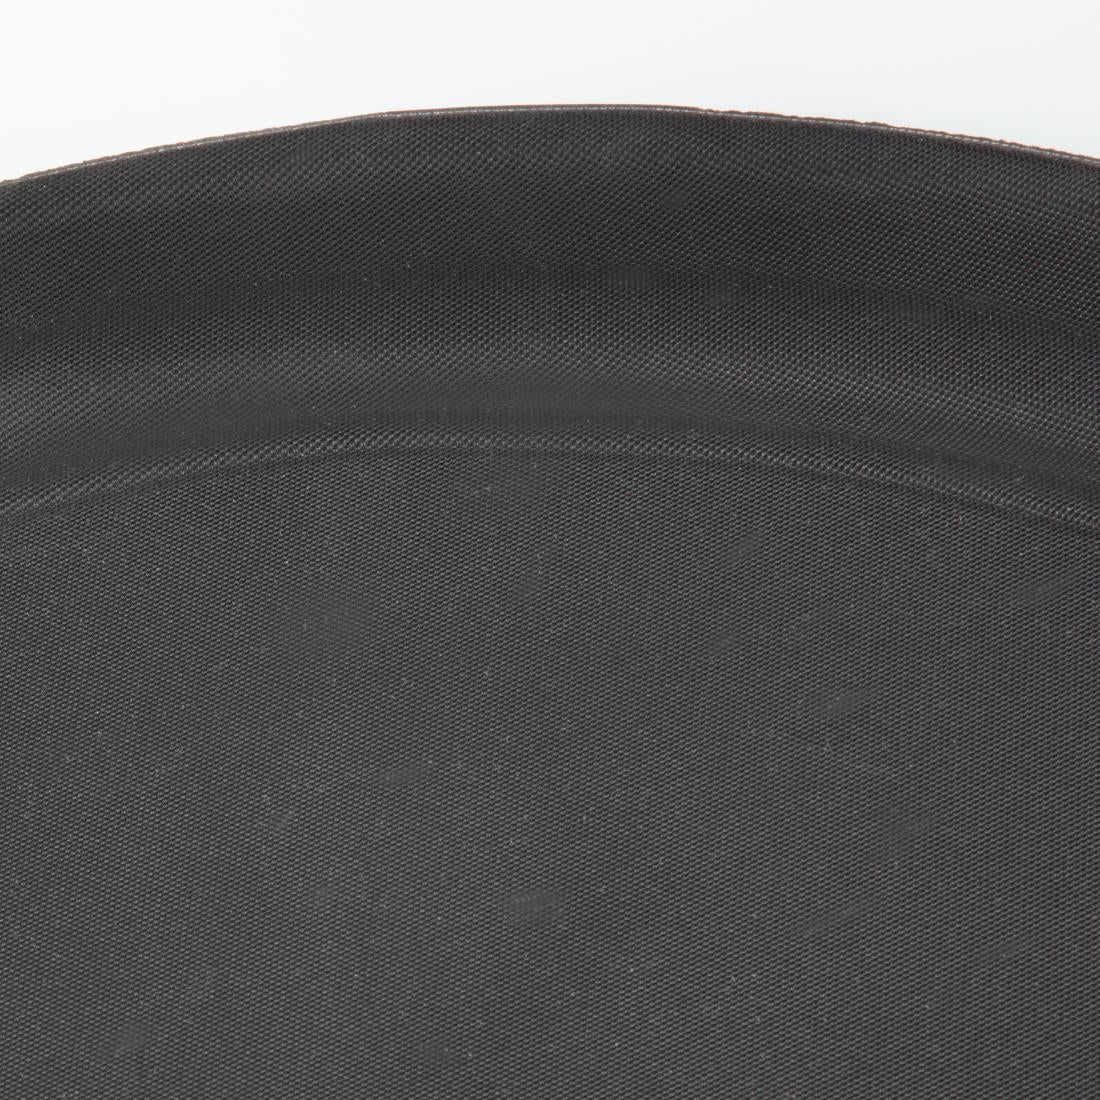 Kristallon Polypropylene Oval Non-Slip Tray Black 685mm JD Catering Equipment Solutions Ltd